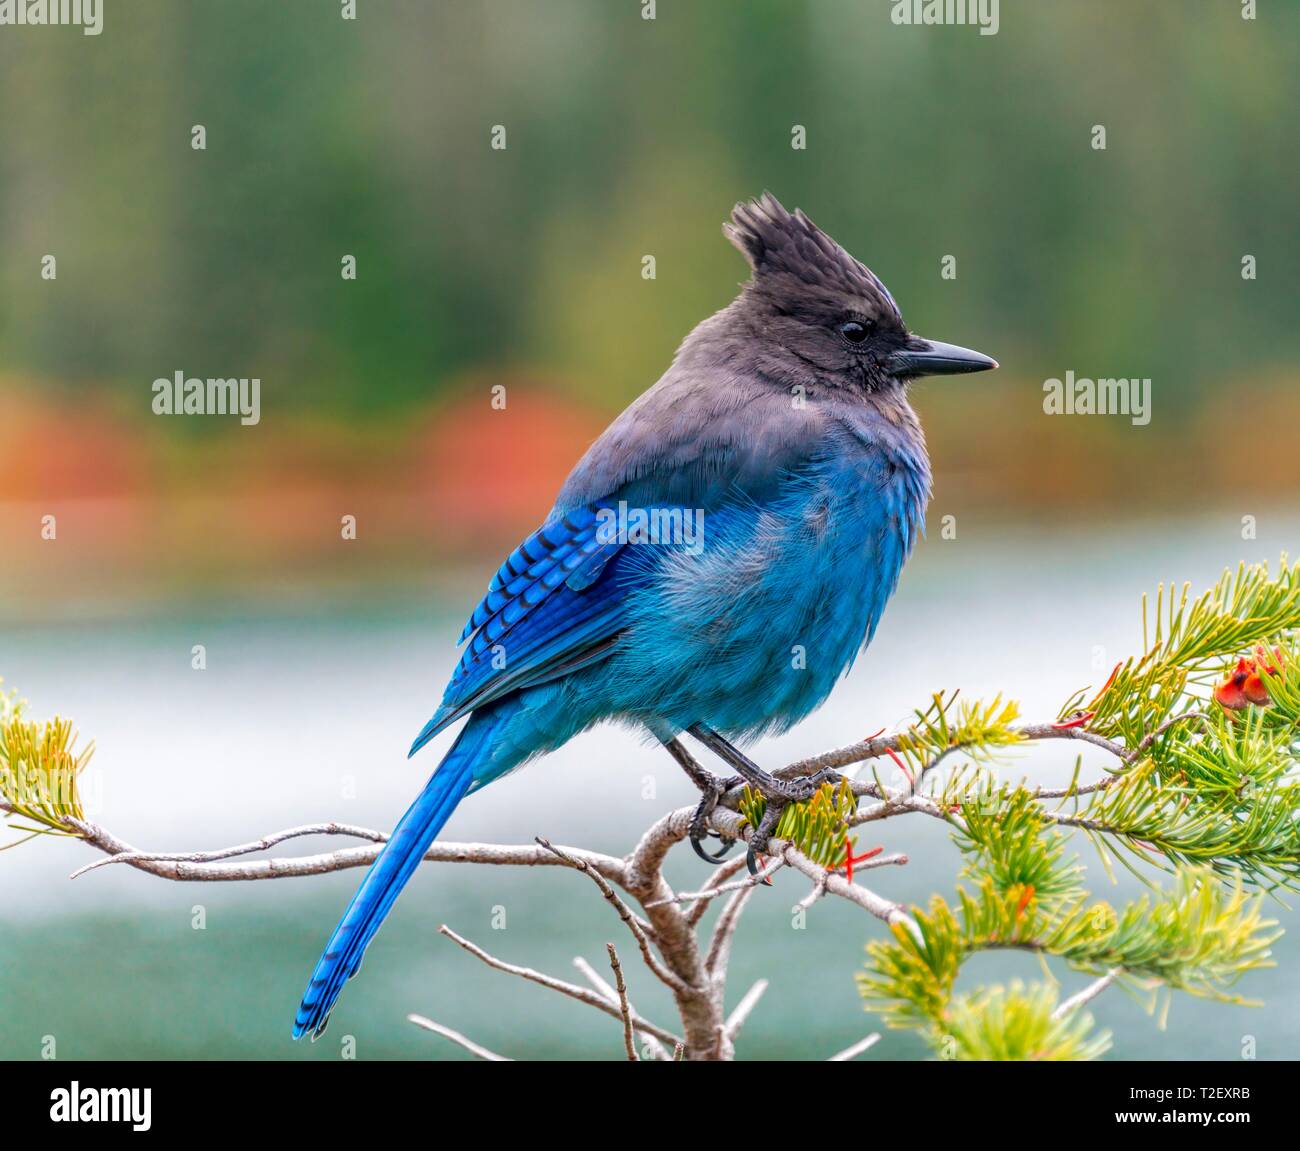 Steller's jay (Cyanocitta stelleri), blue bird sitting on a branch, Mount Rainier National Park, Washington, USA Stock Photo